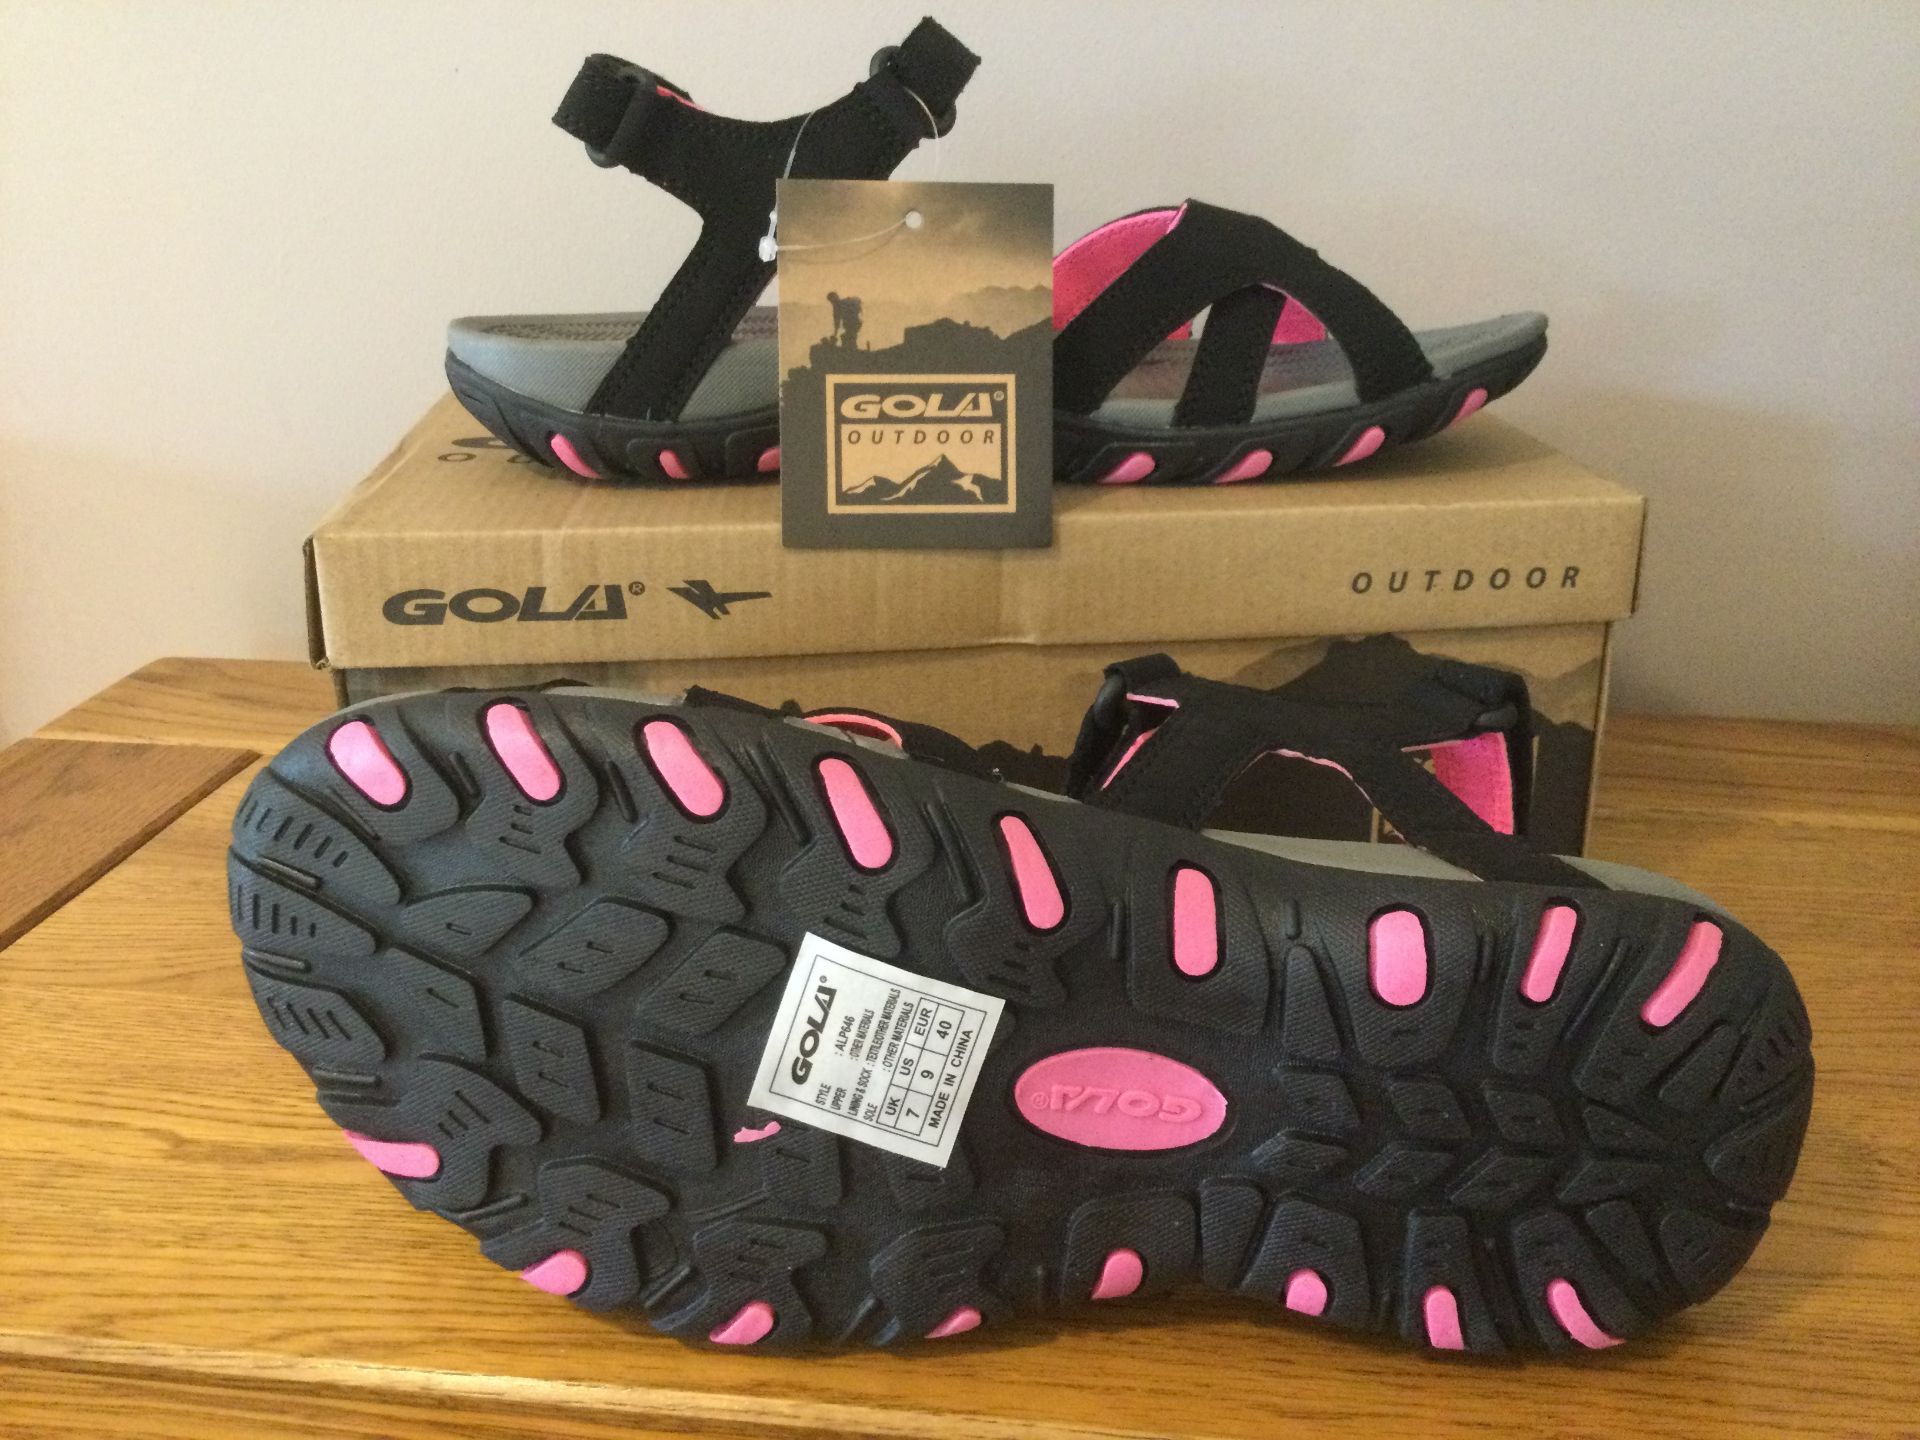 Gola Women's “Cedar” Hiking Sandals, Black/Hot Pink, Size 7 - Brand New - Image 3 of 4